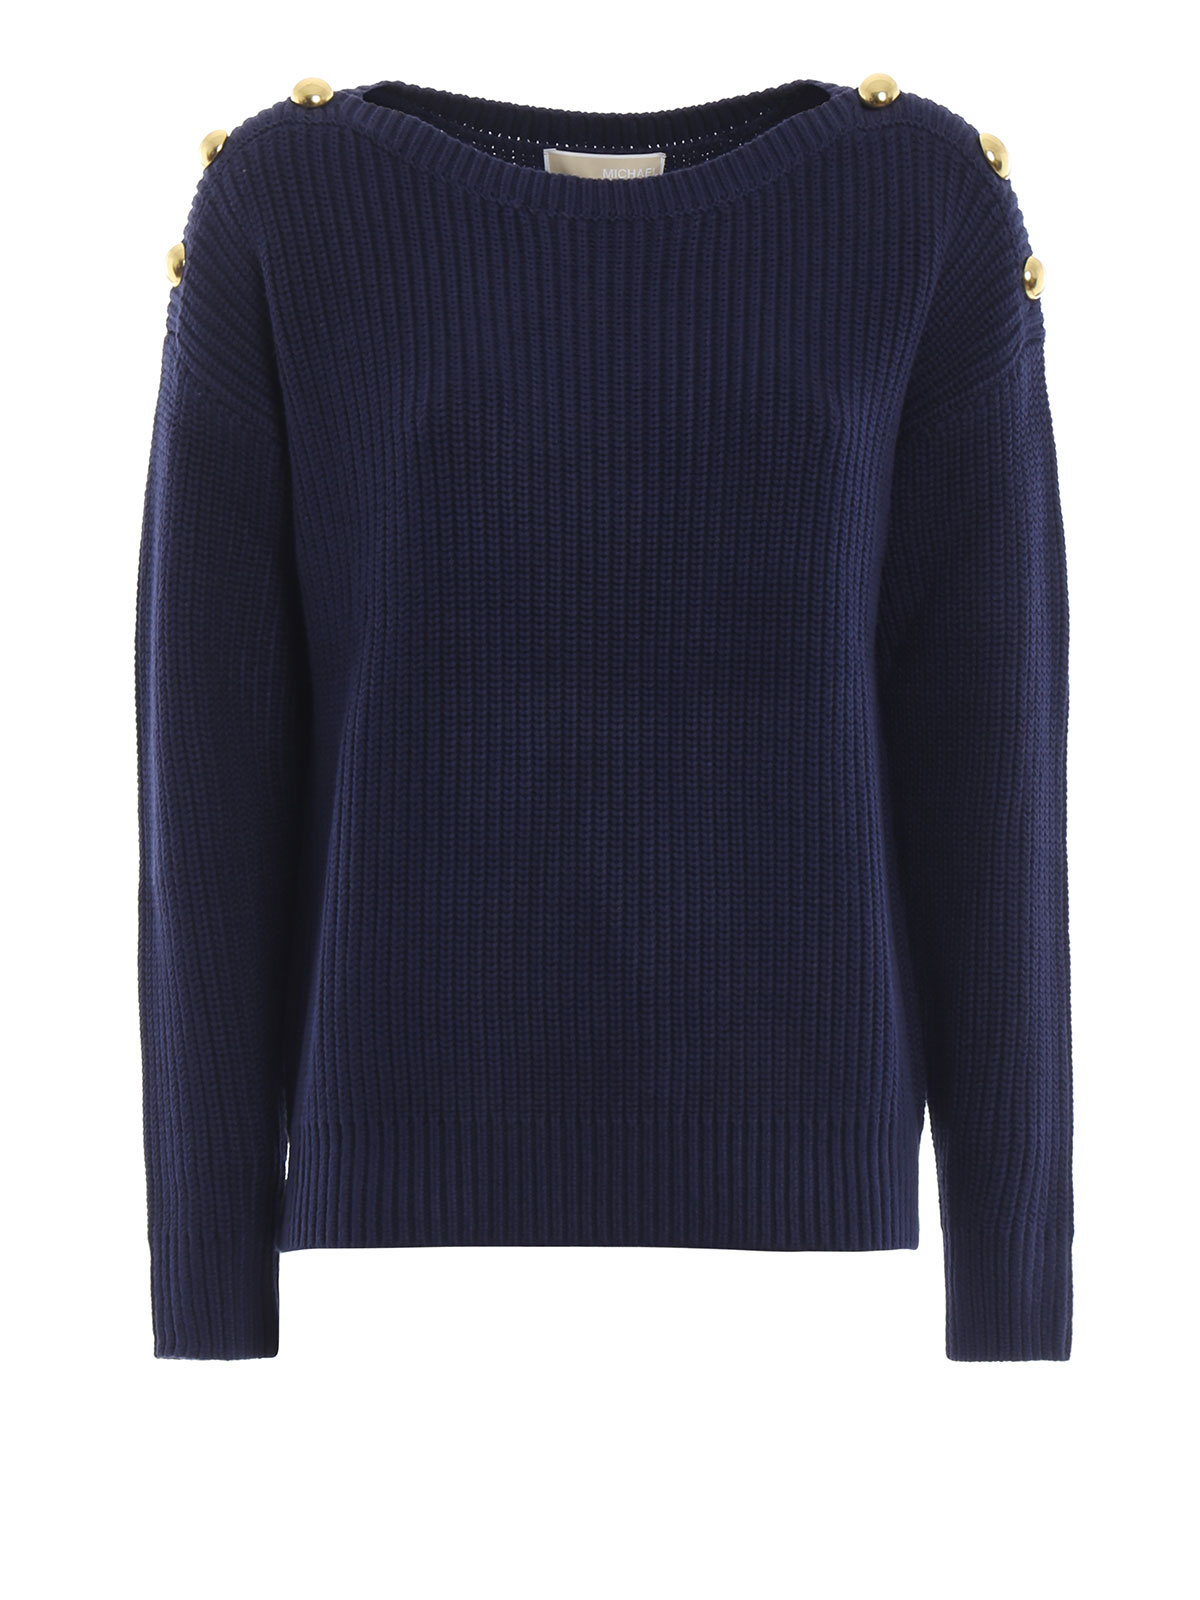 Boat necks Michael Kors - Blue sweater with gold button detail -  MU86NNCMP5456